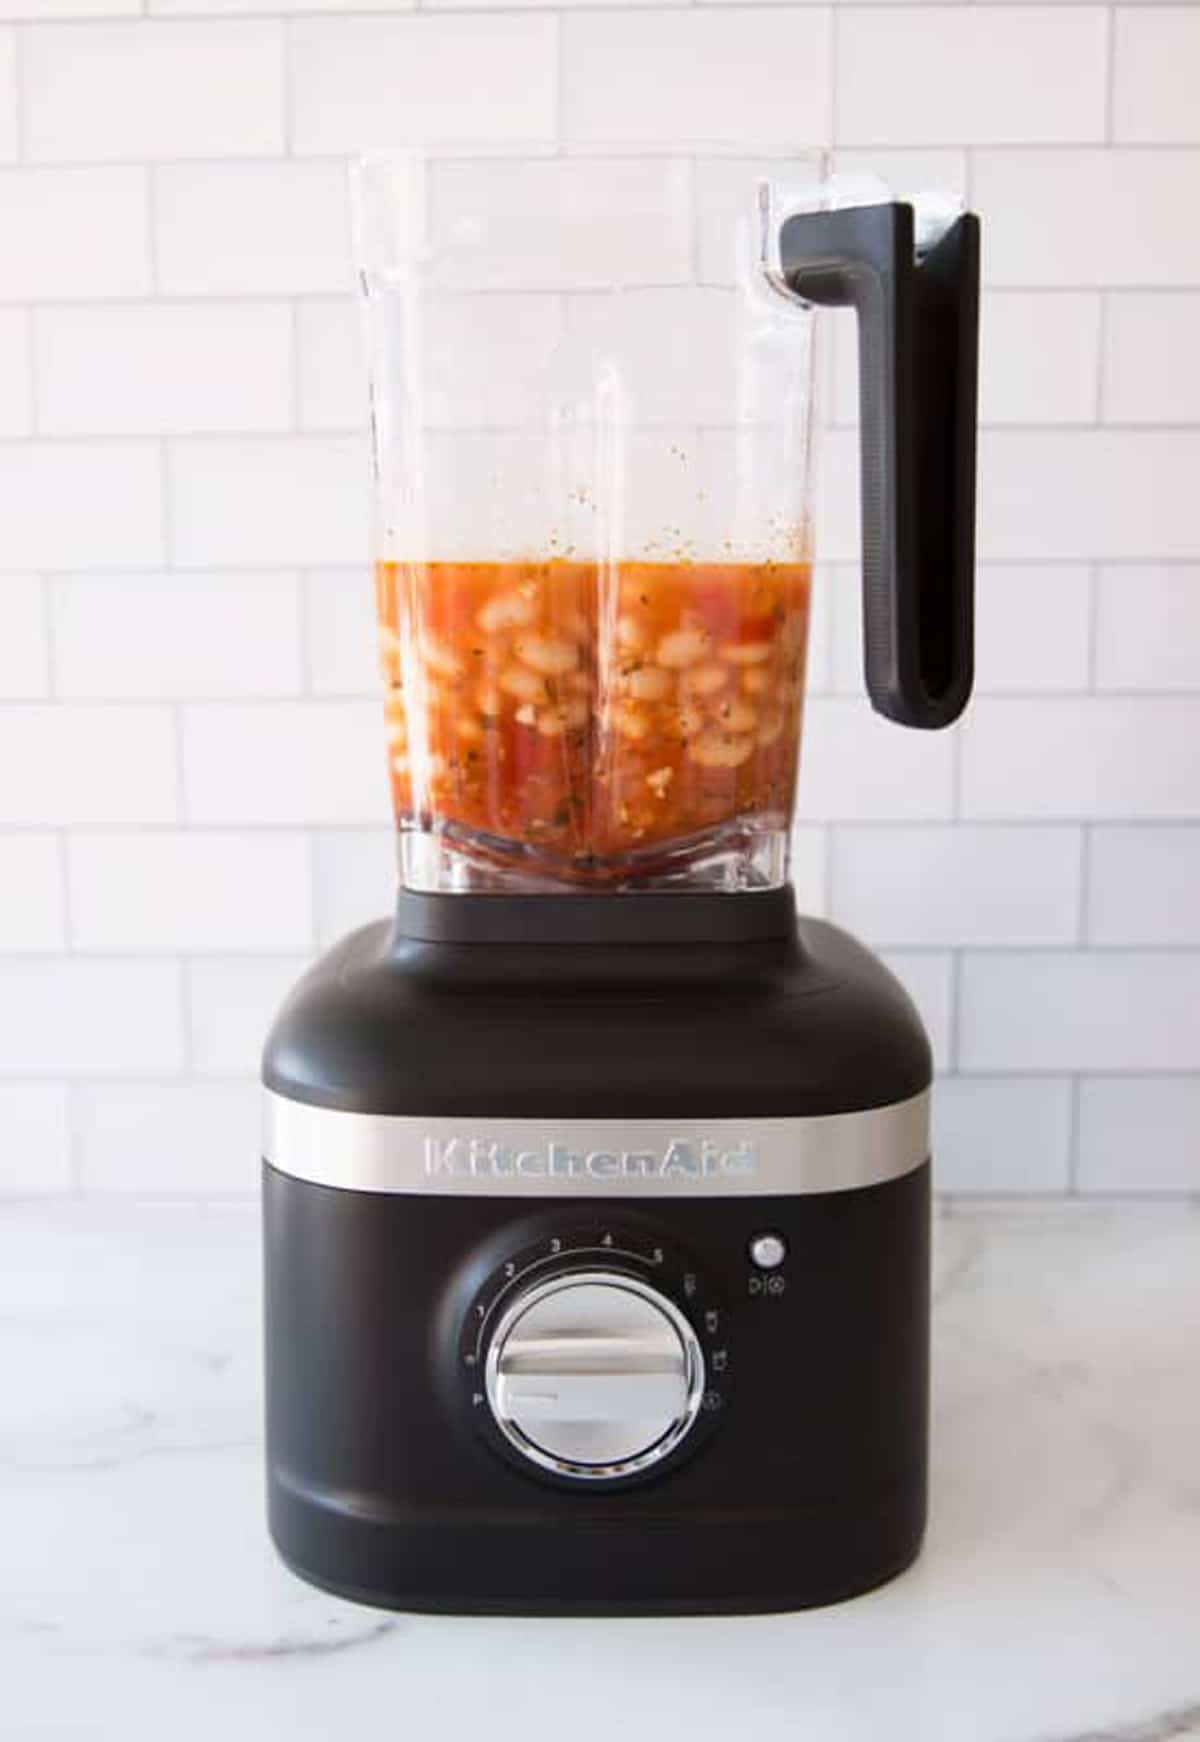 KitchenAid blender containing white beans and tomato juice.